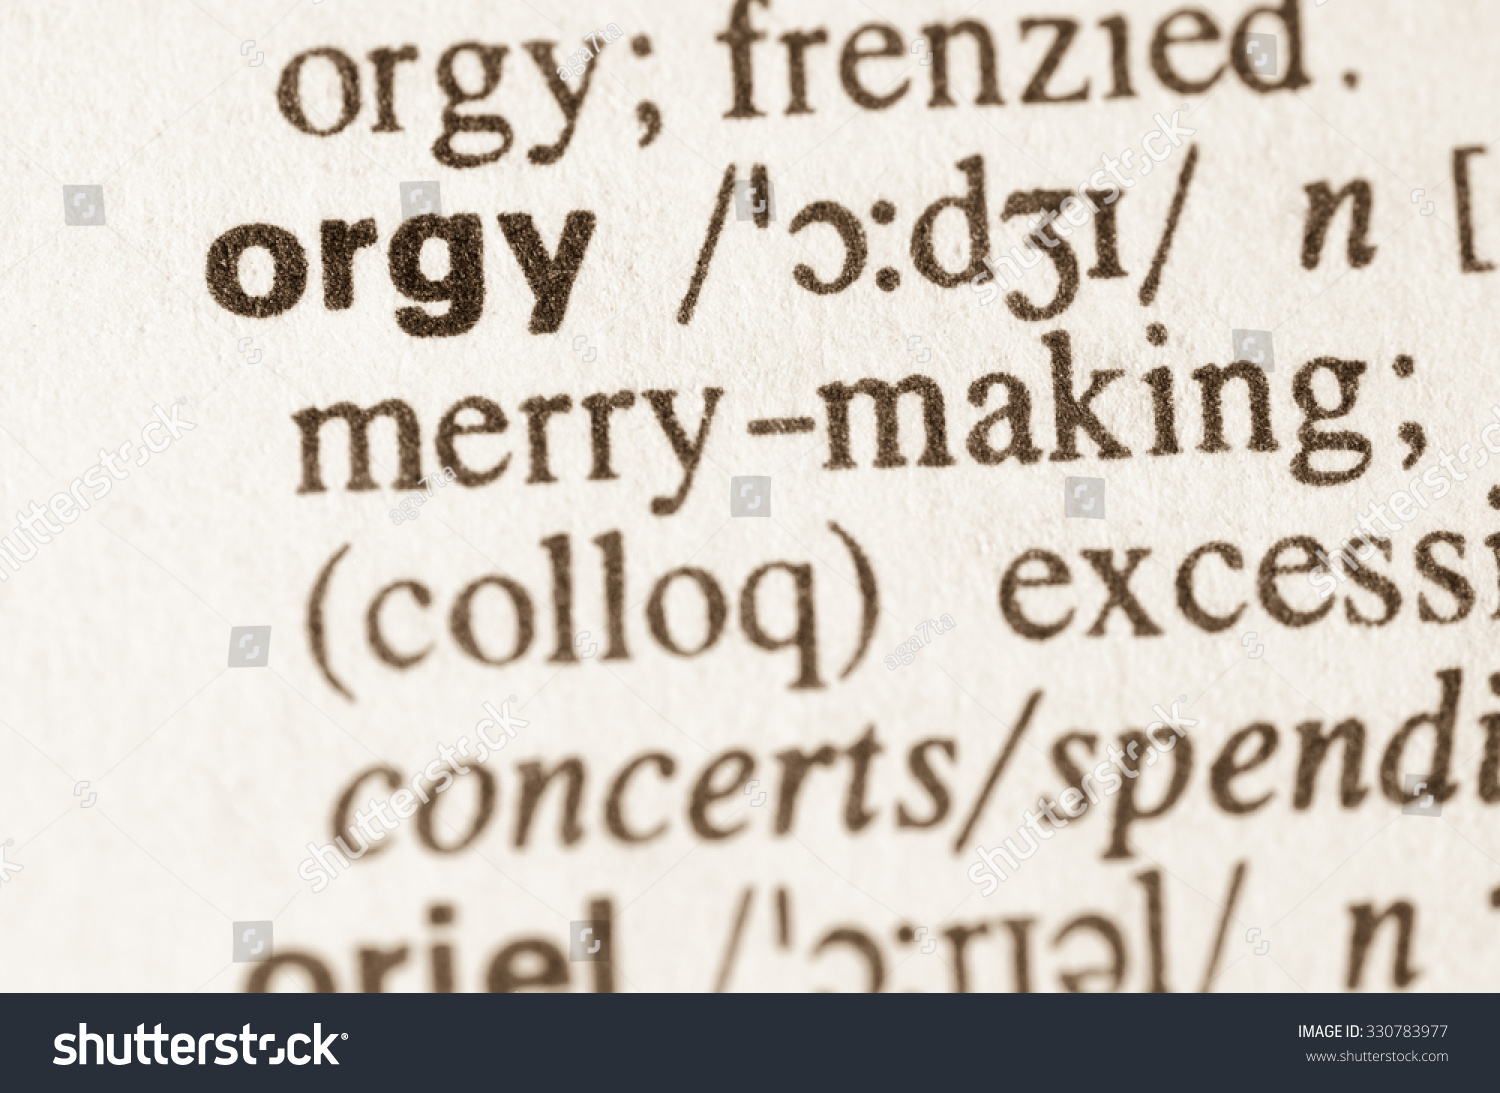 Dictionary Orgy 95